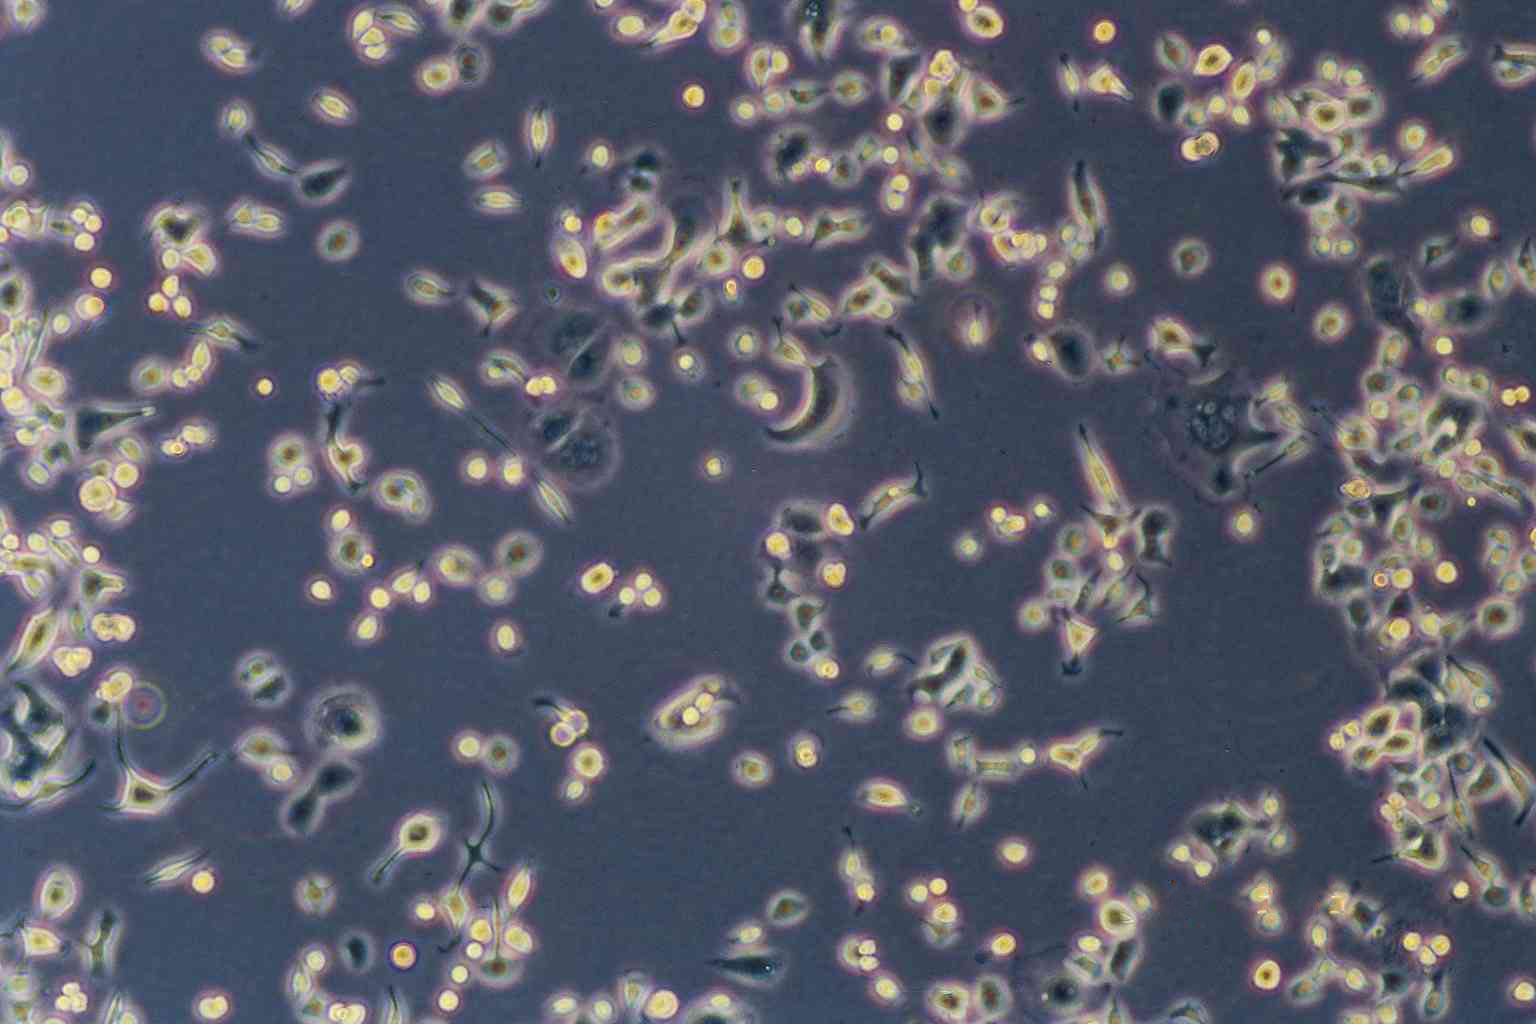 MLO-Y4 Cells|小鼠骨样细胞系,MLO-Y4 Cells